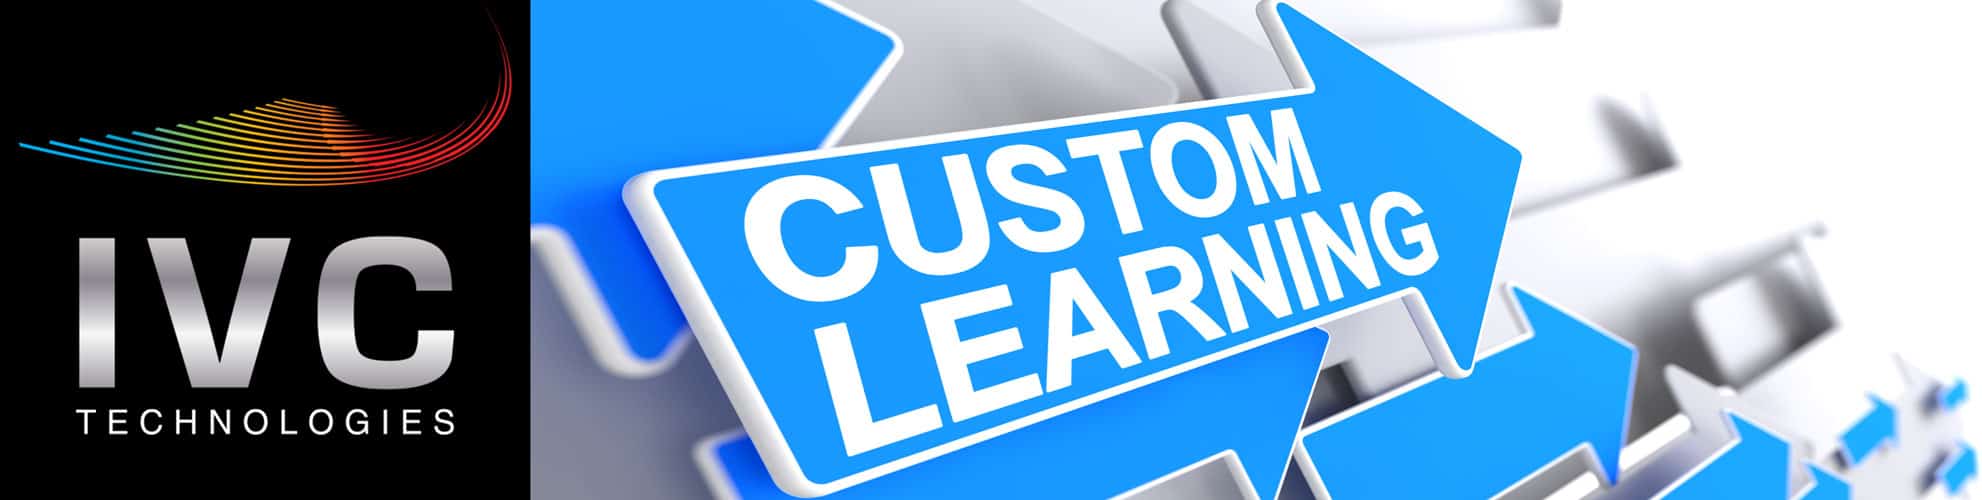 AdobeStock 150197602 - Custom Training and Mentoring